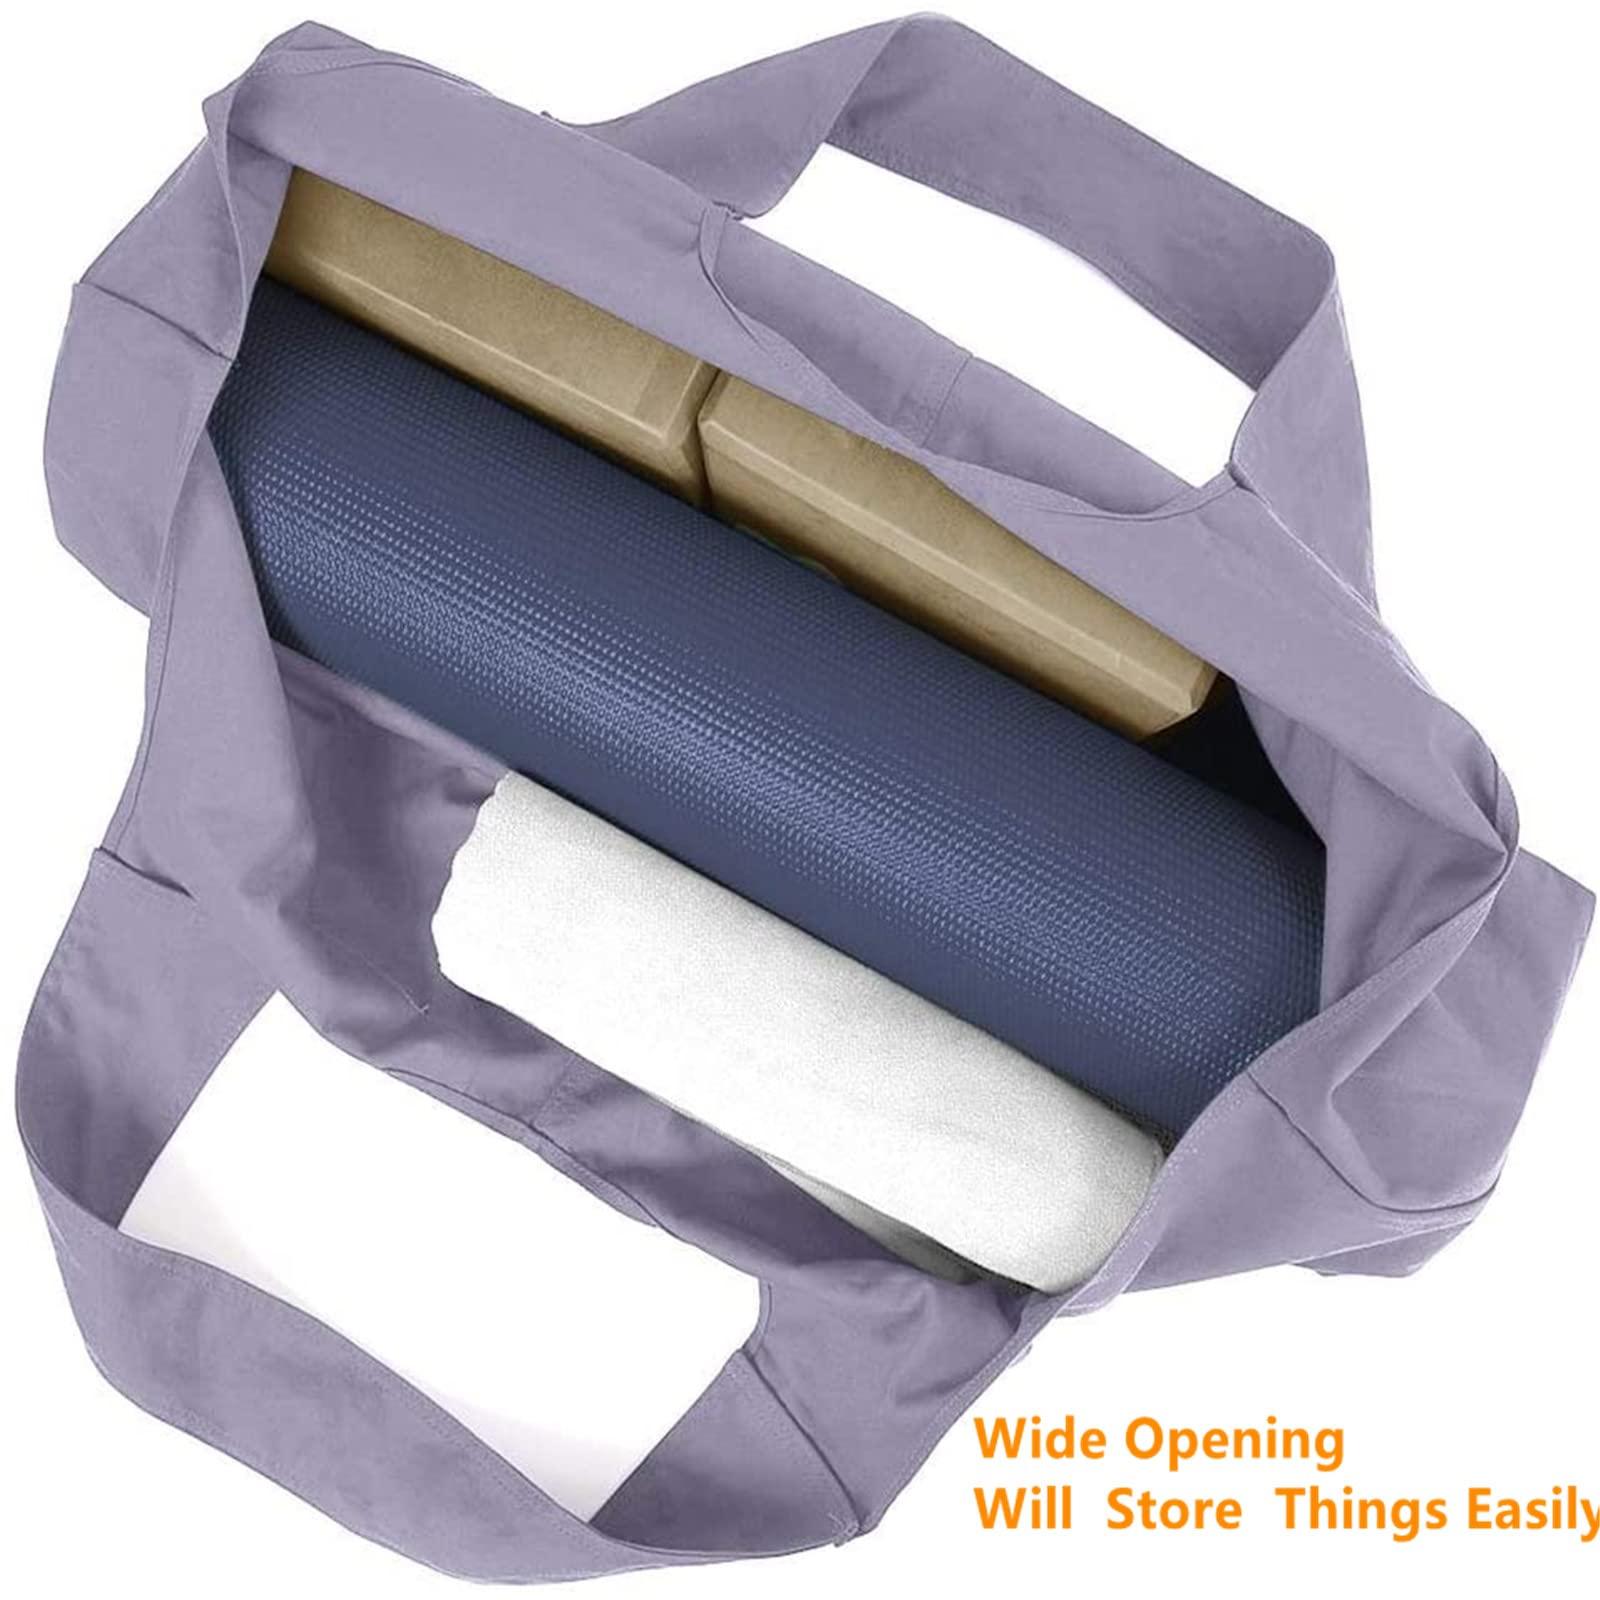 3DTengkit Yoga Bag Large Yoga Mat Bag,Canvas Yoga mat Tote Bag with Inside Zip Pocket Fits Most Size Mats (black) 3